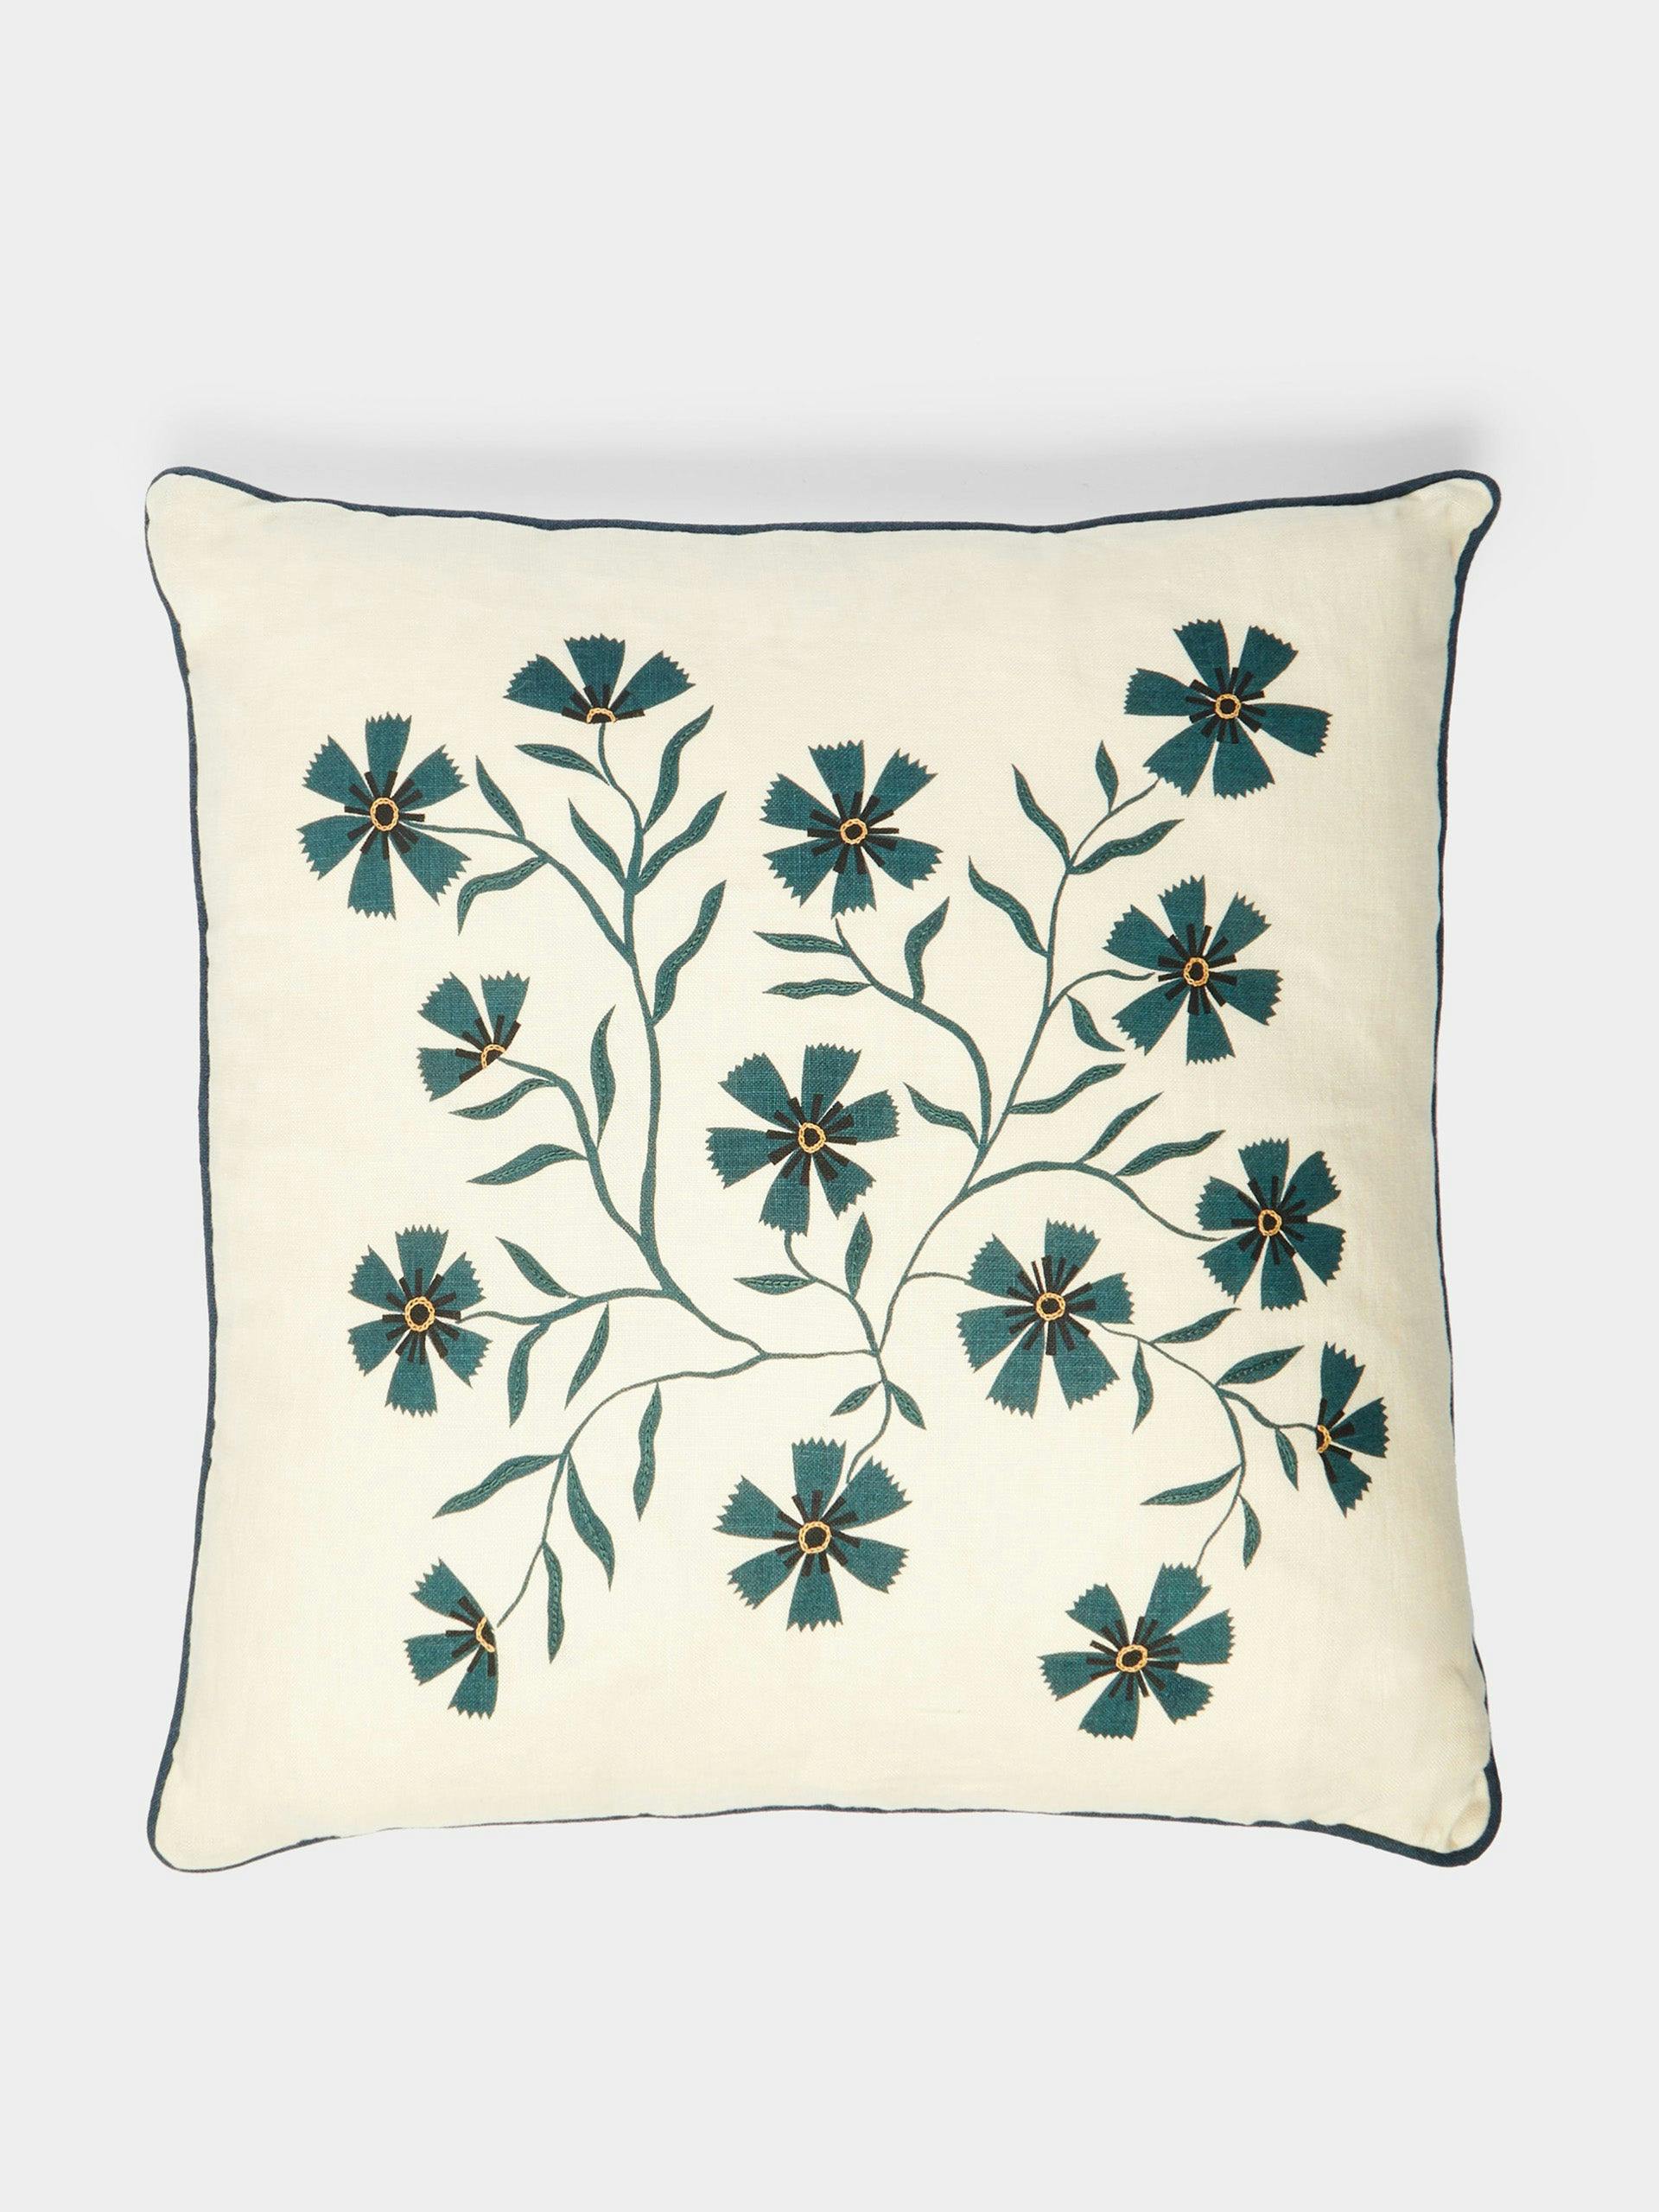 Printed floral cotton cushion